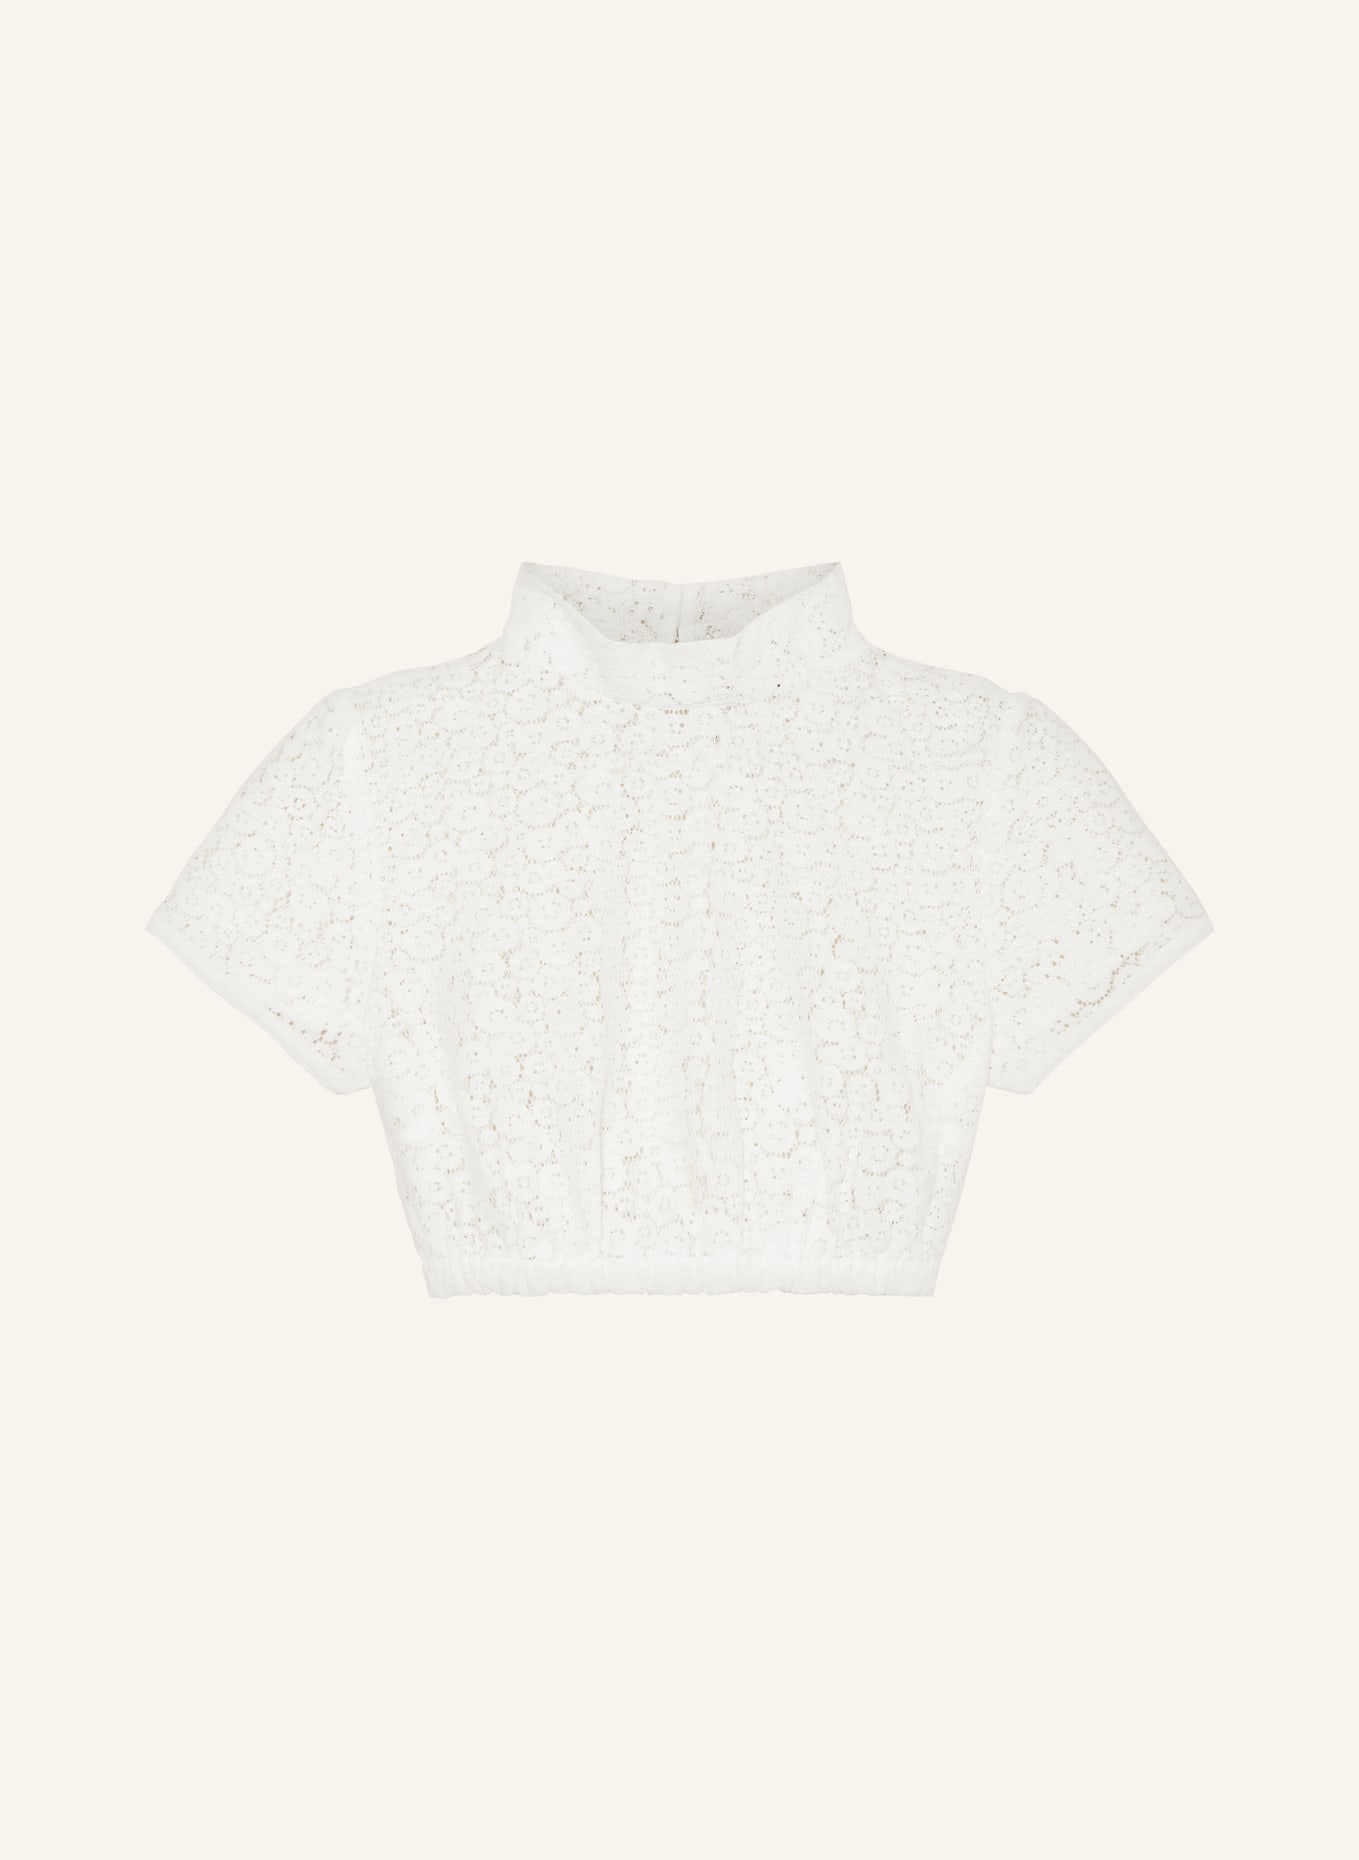 ALISSA BY KINGA MATHE Dirndl blouse INGA made of lace, Color: WHITE (Image 1)